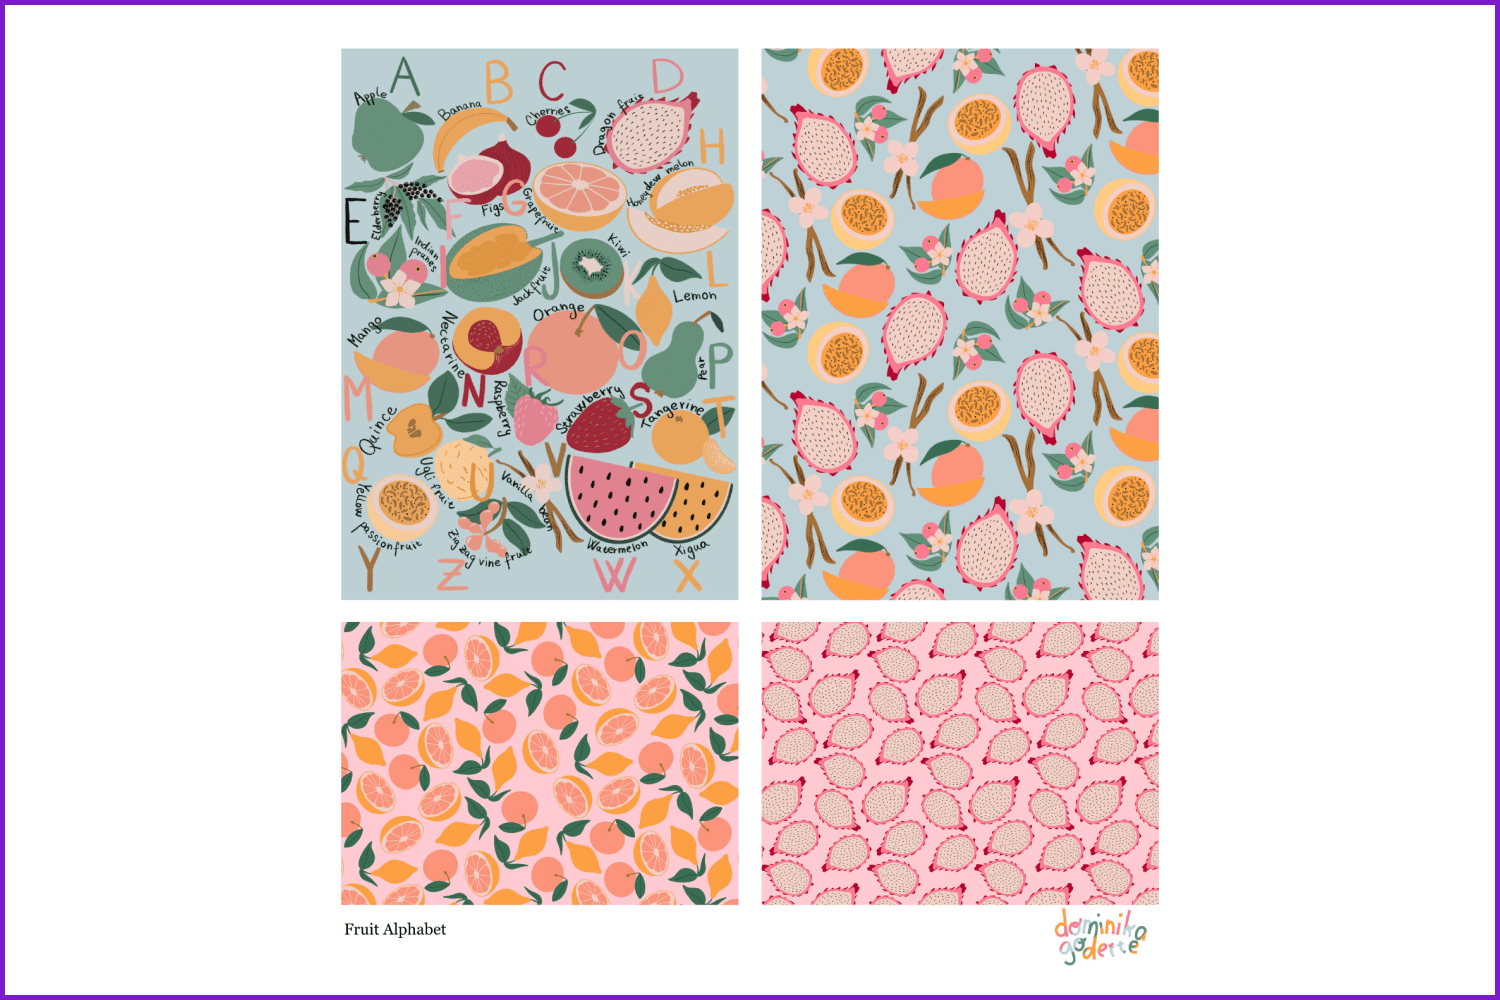 Fruit alphabet patterns.